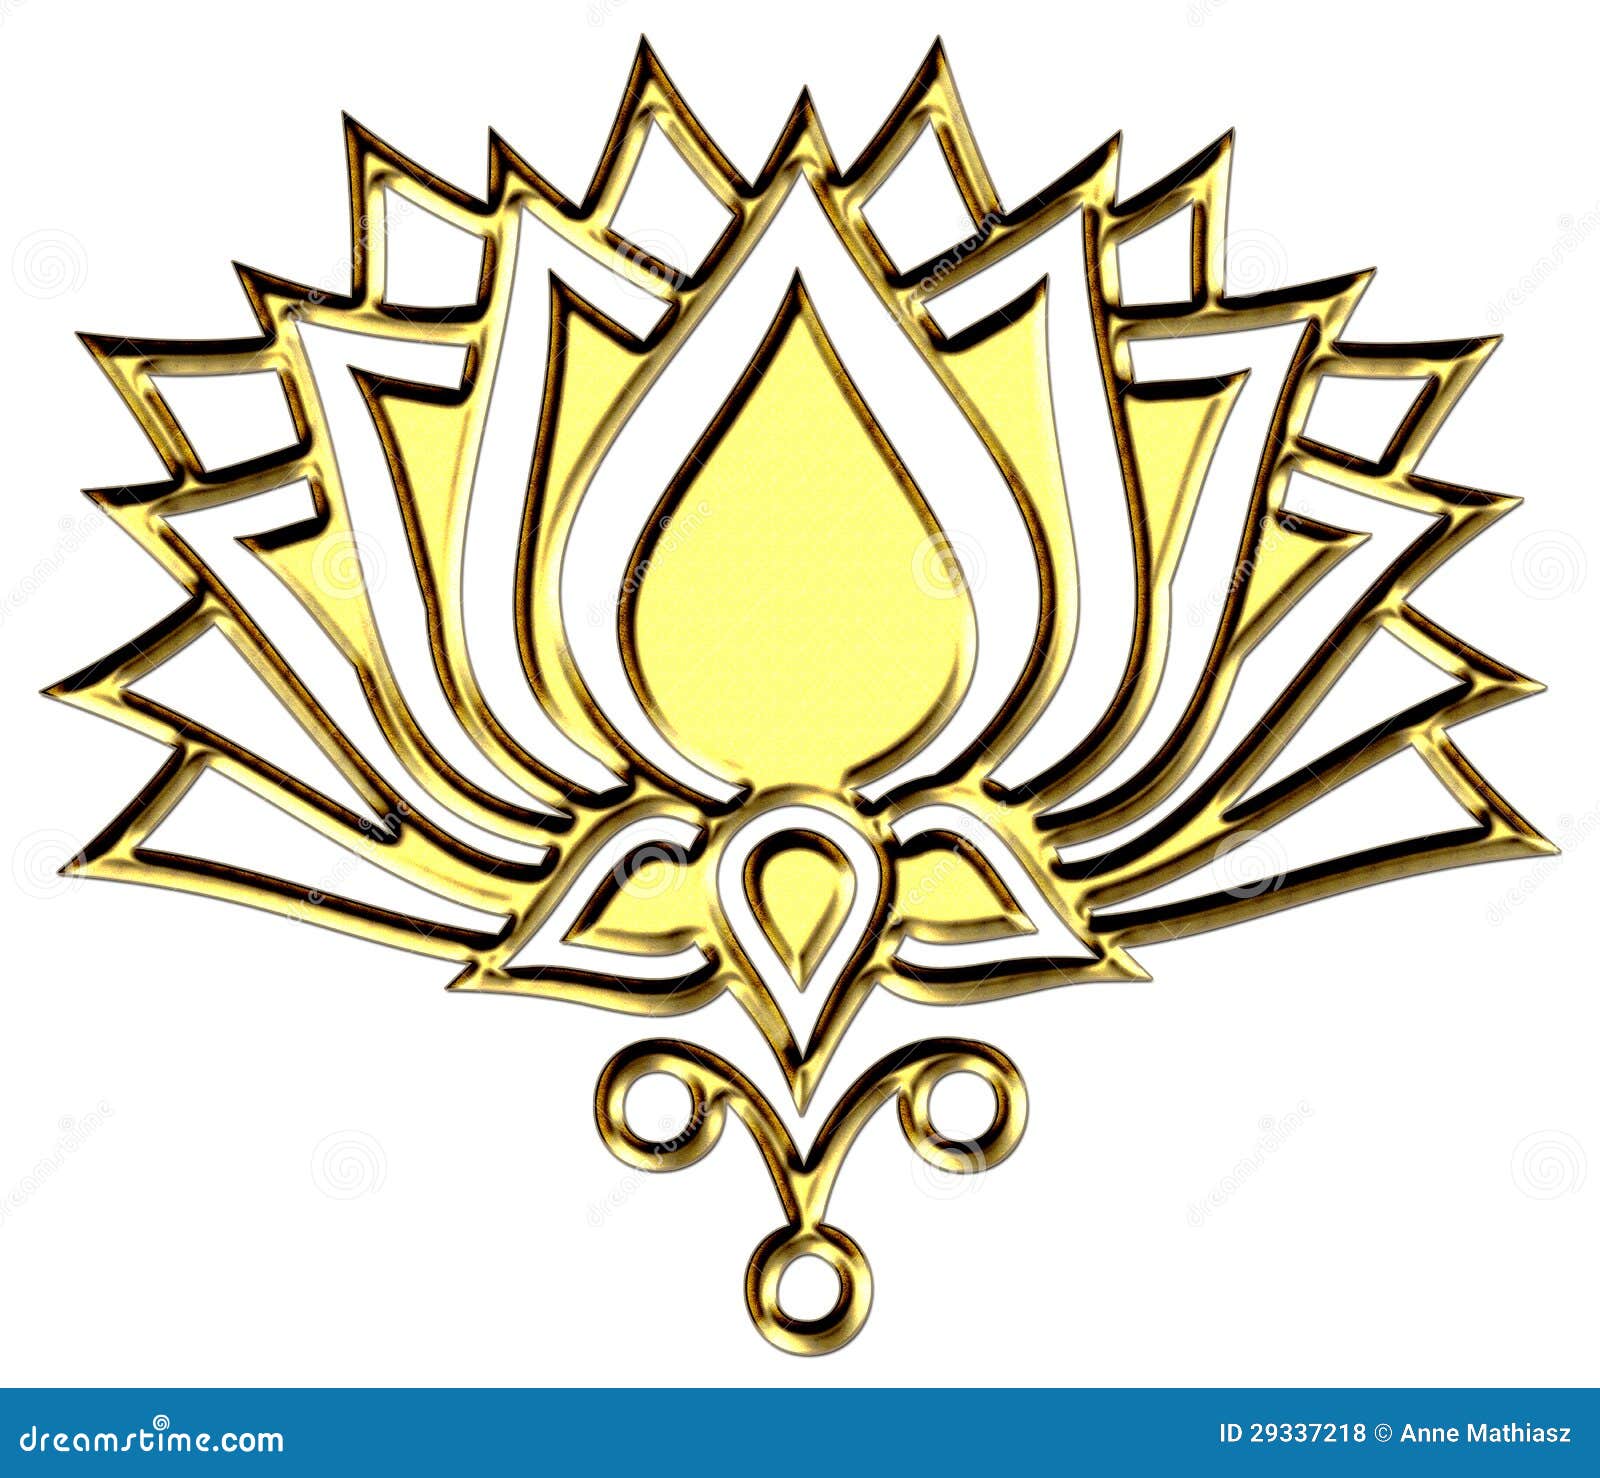 golden-lotus-flower-symbol-enlightenment